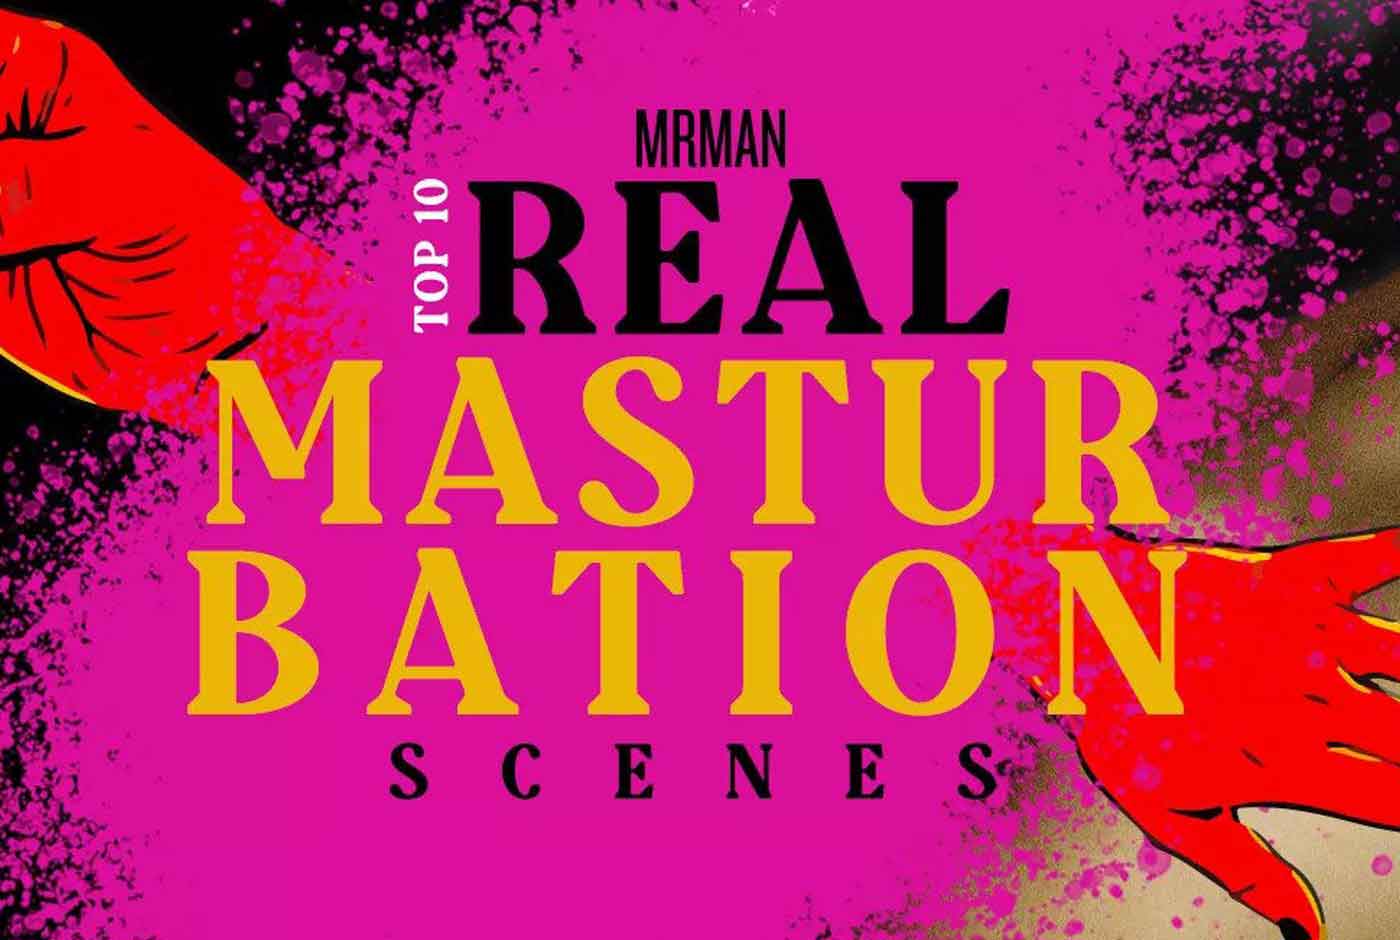 Mr. Man’s Top 10 Real Masturbation Scenes